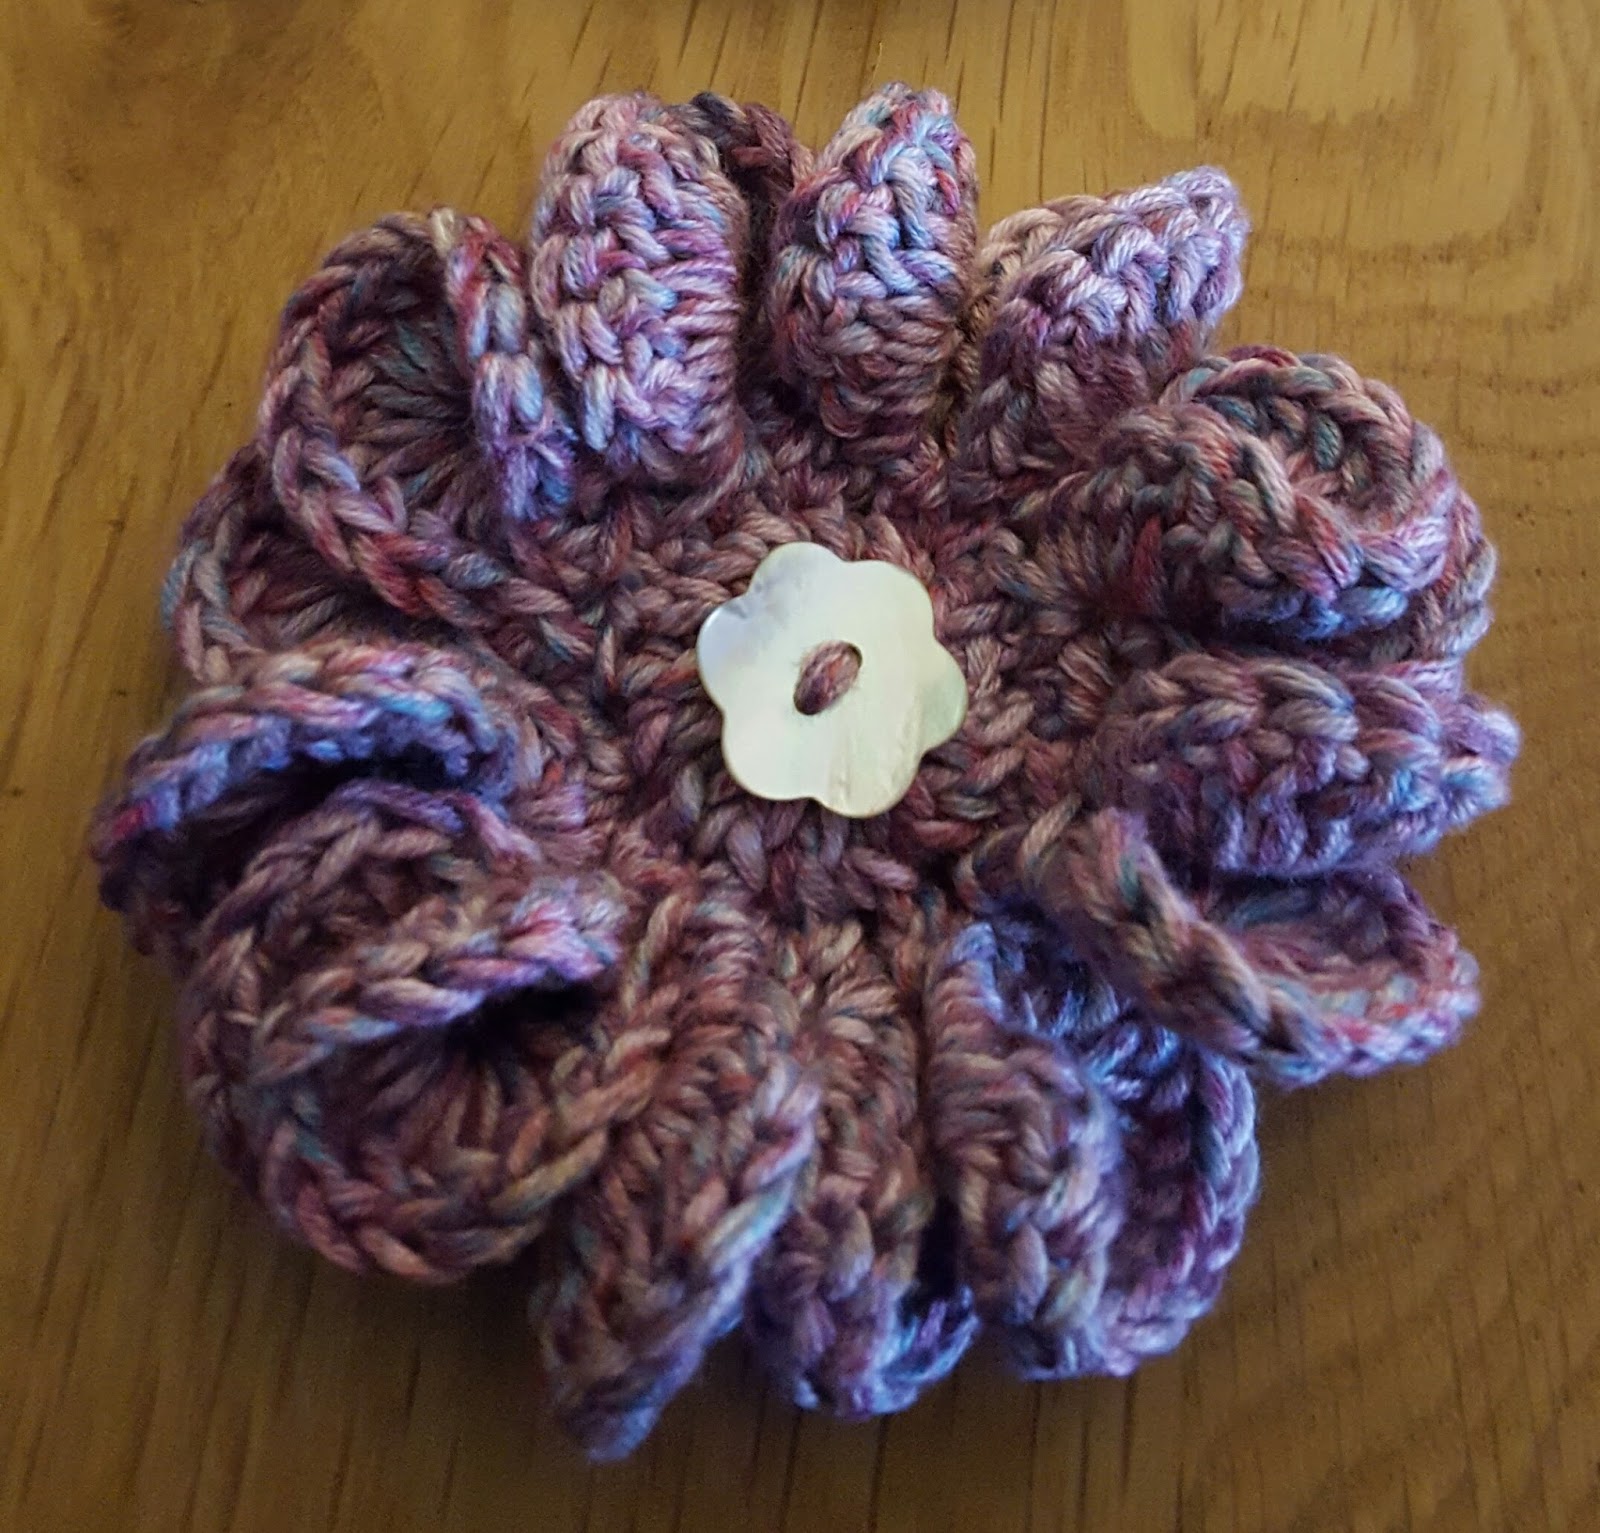 Beautiful and productive crochet: Louisa Harding Azalea